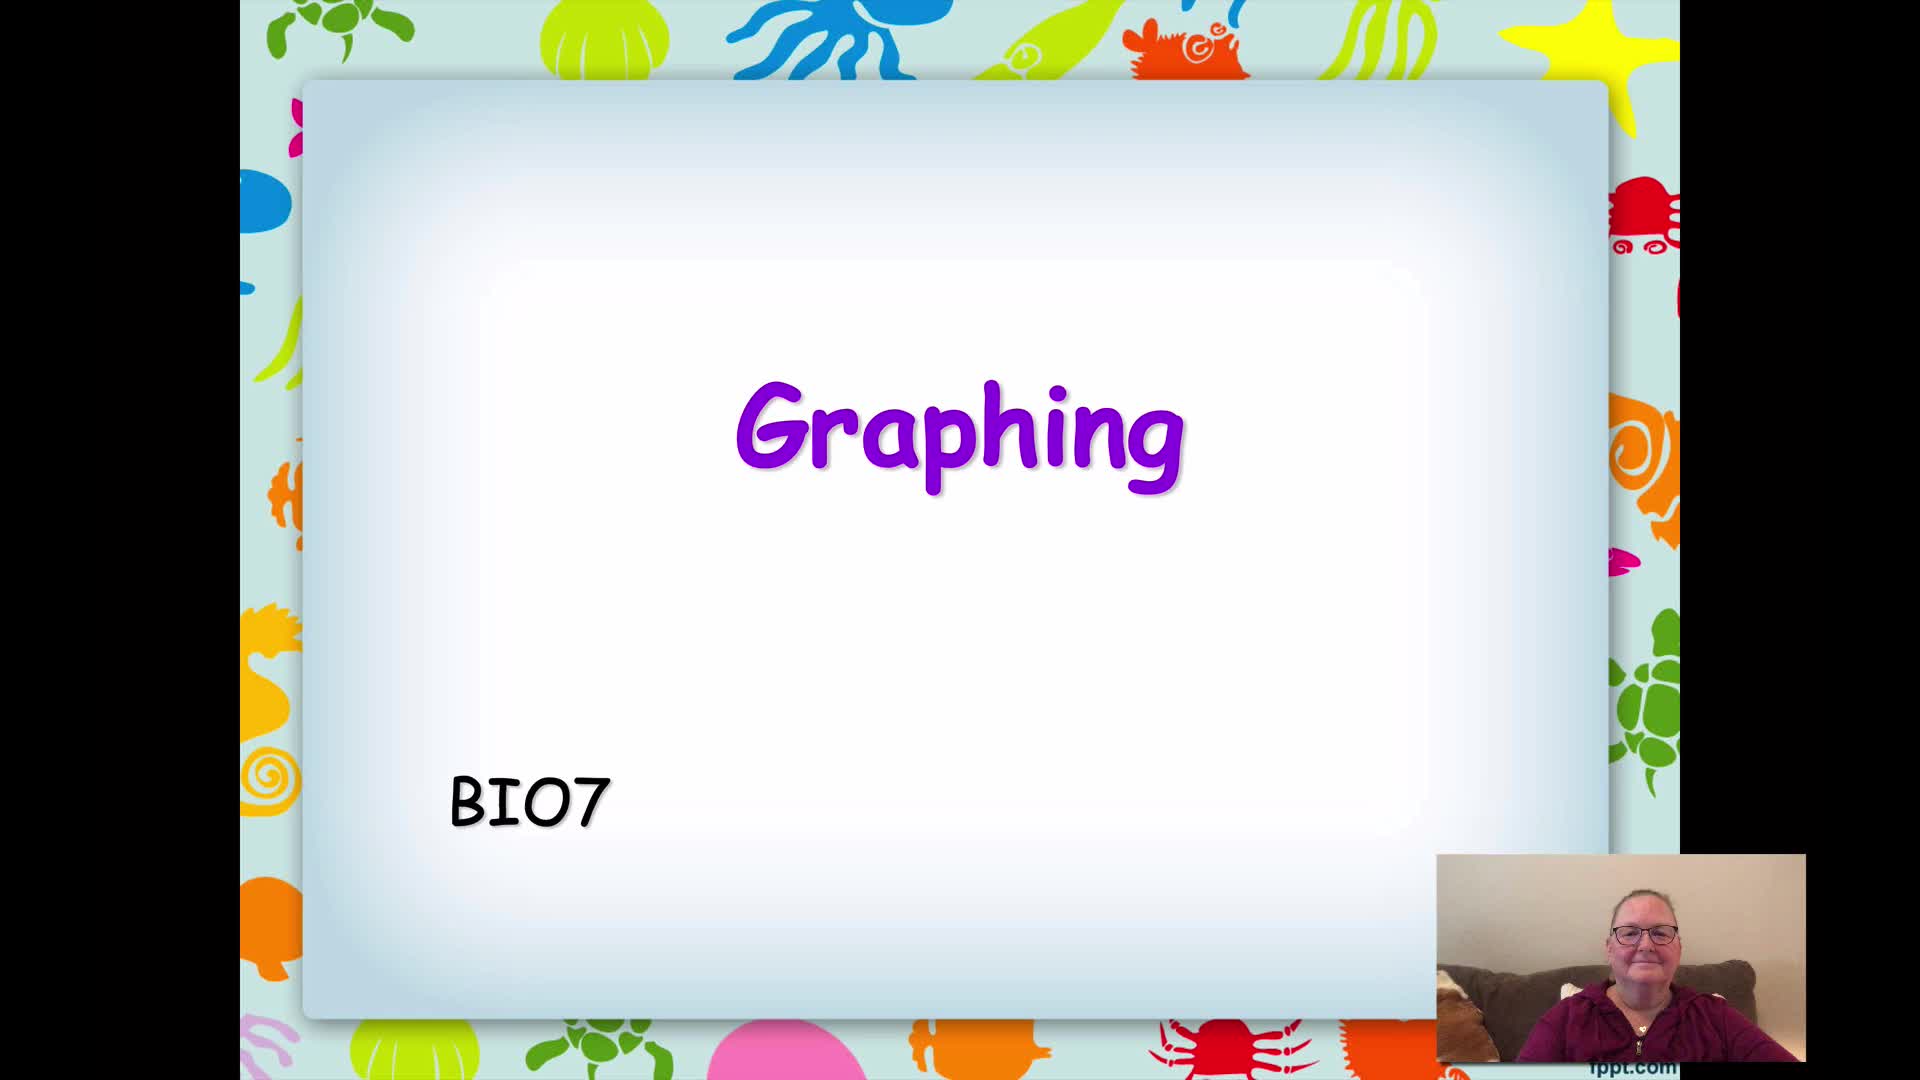 1. BIO7 - Graphing